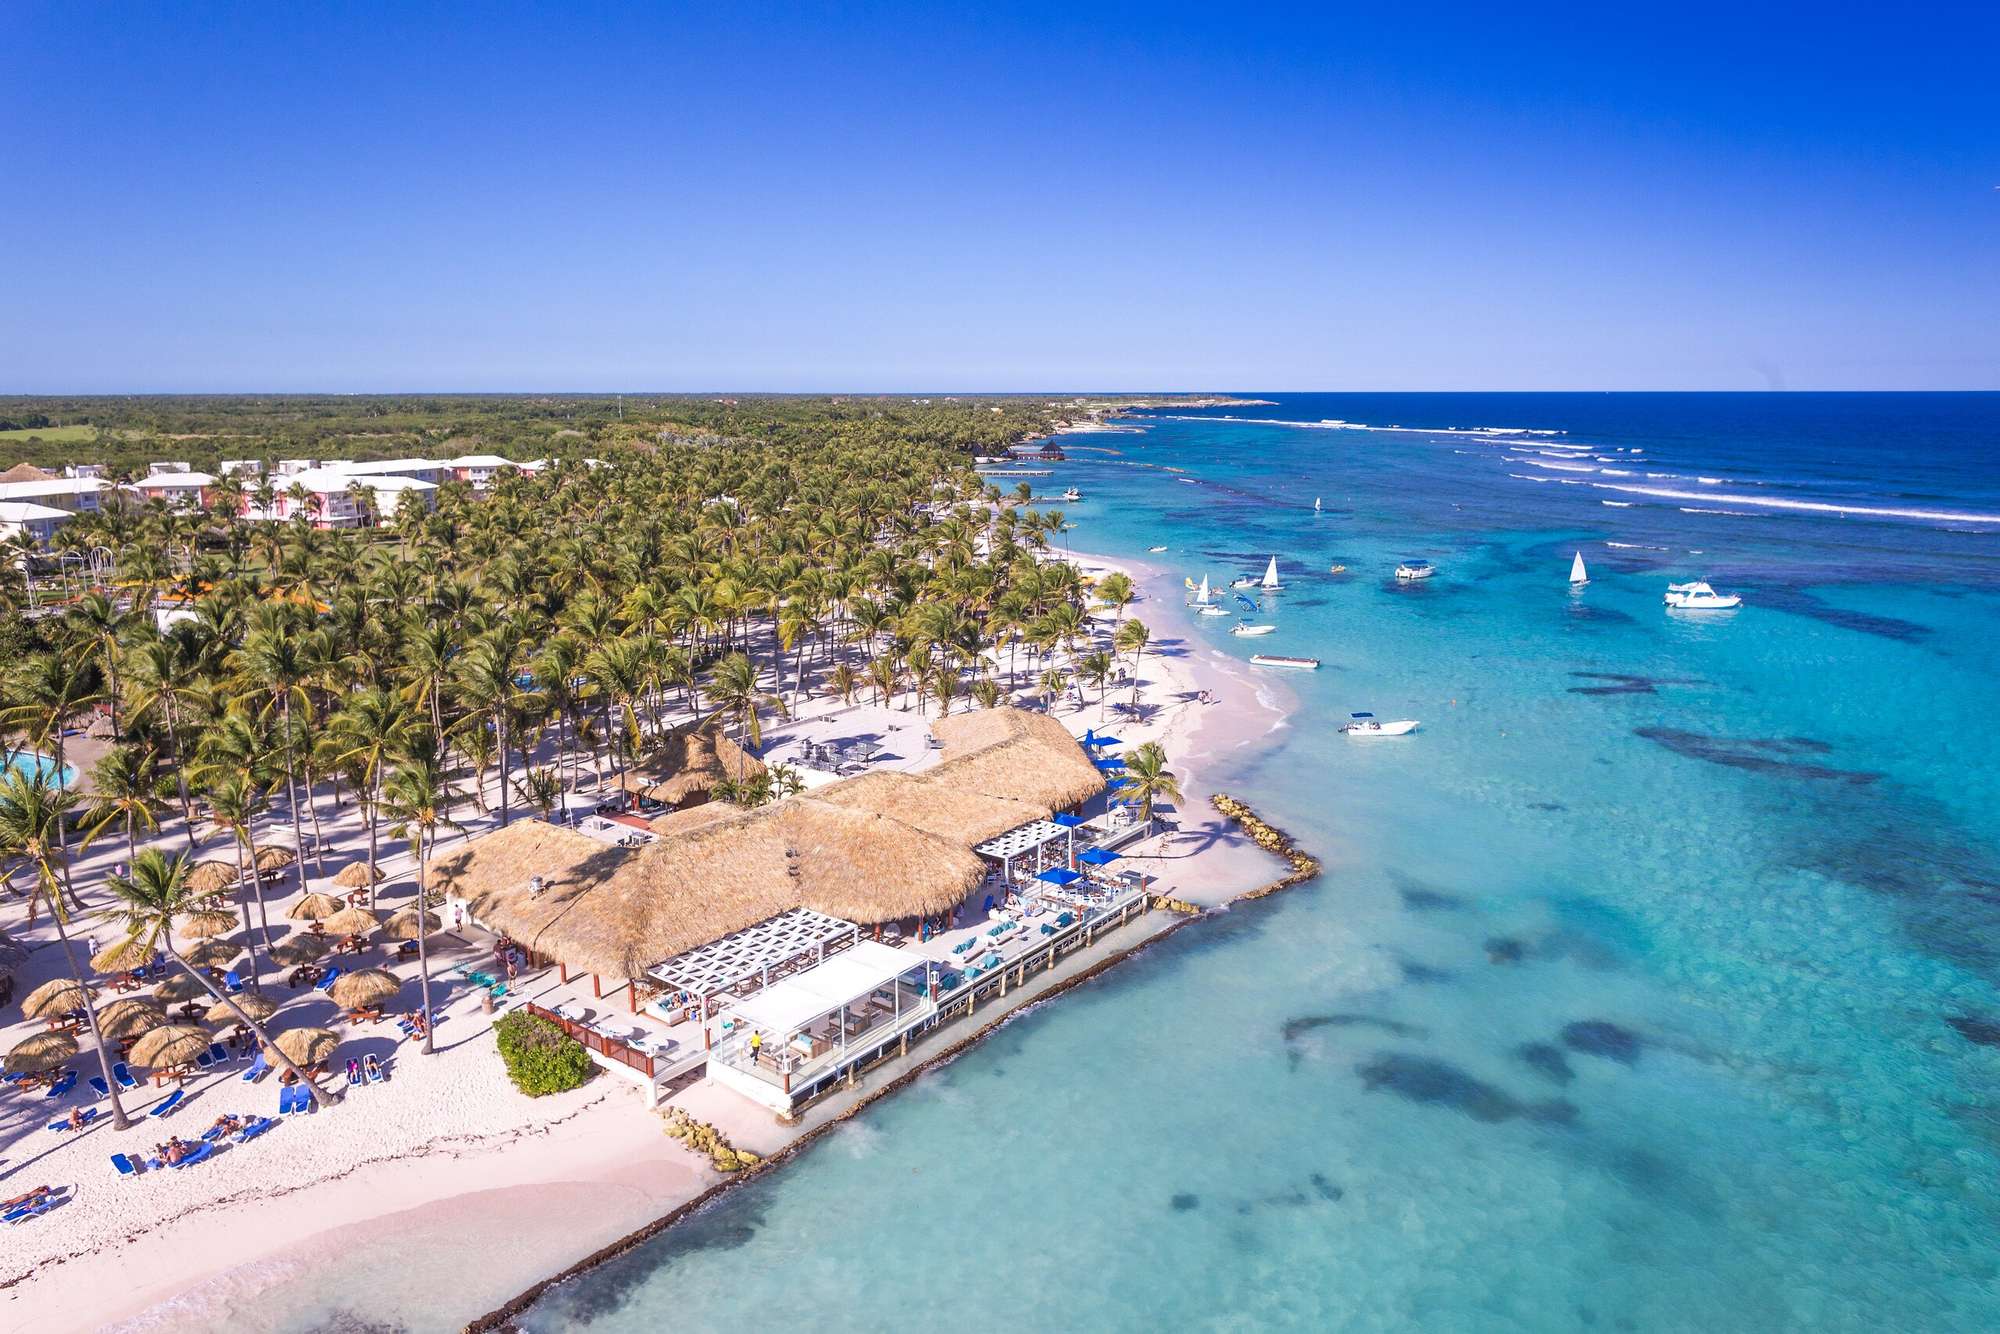 Property image of Club Med Punta Cana